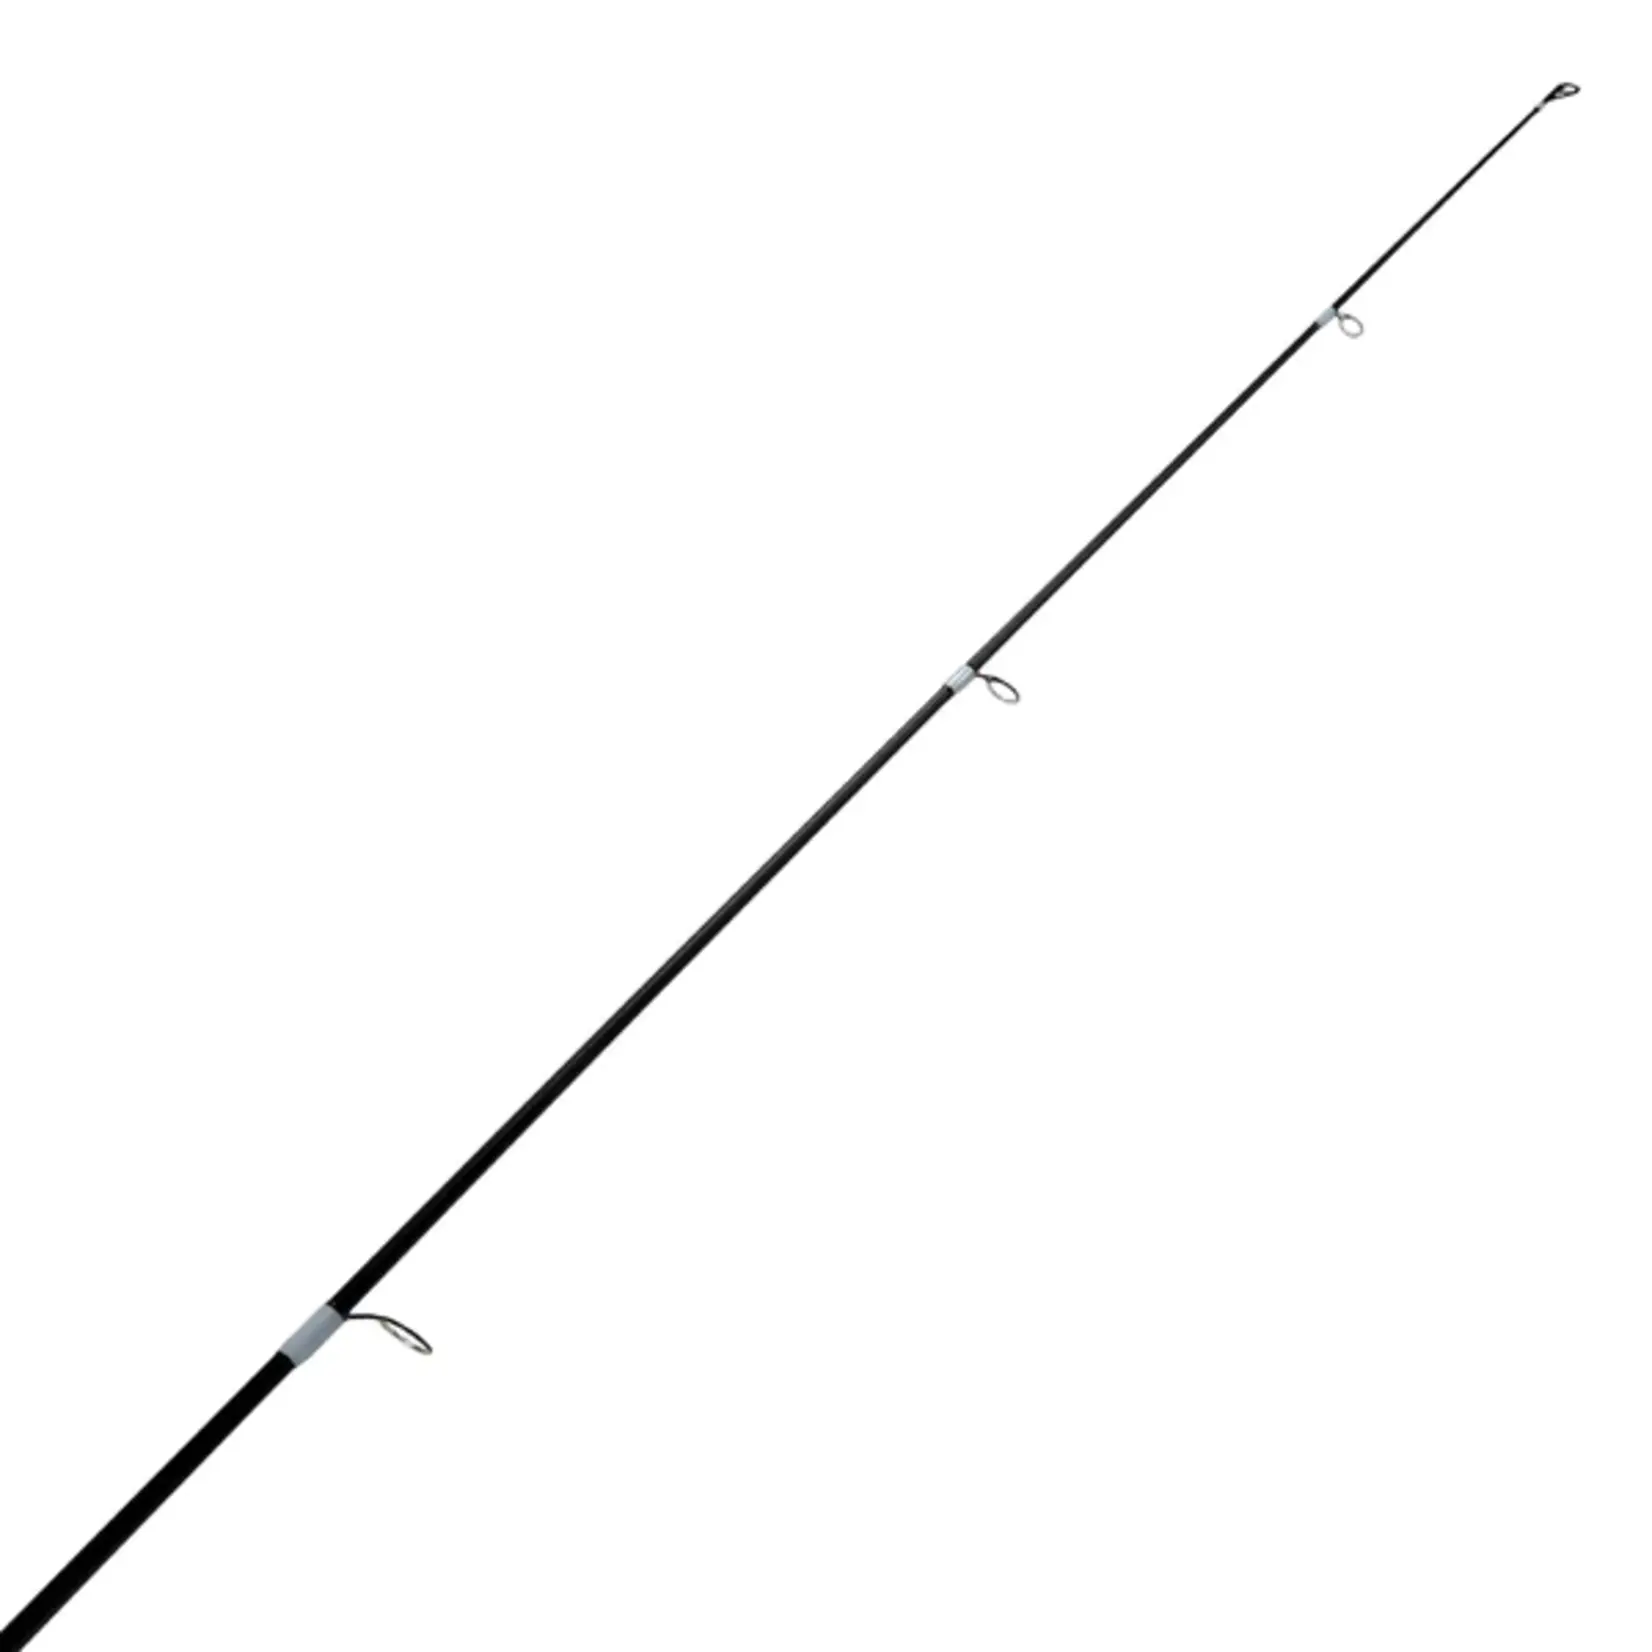 Okuma Fishing Tackle Okuma Acuador Spinning Combo (6'6'' Medium Fast/3000) 2pc